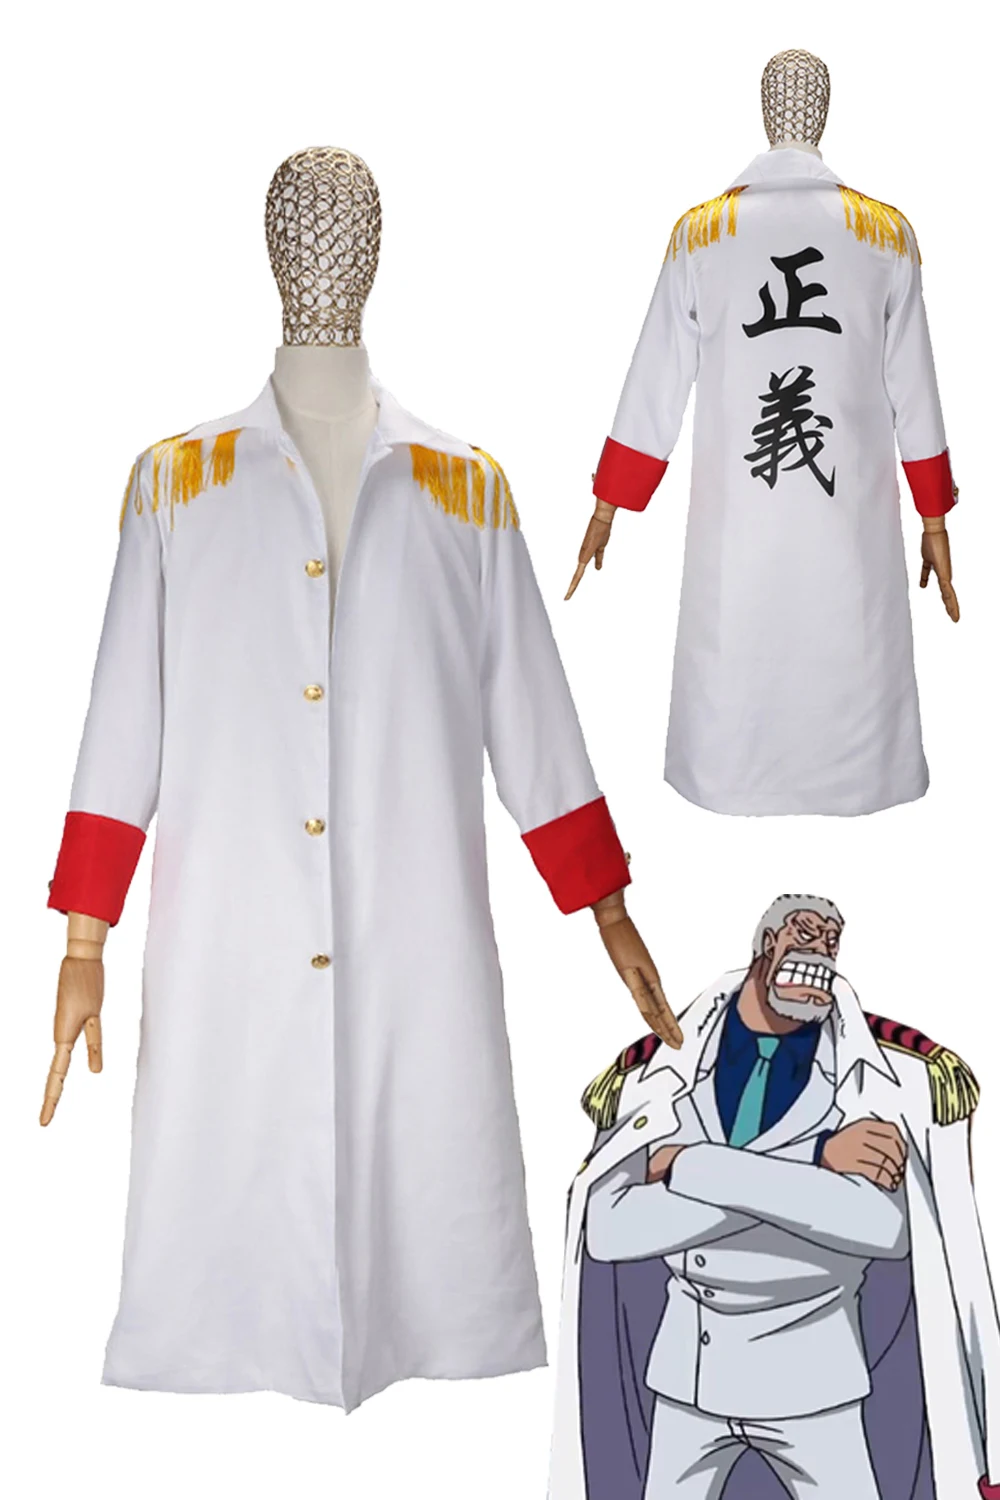 

Monkey D Garp Cosplay Fantasy Cloak Cape Coat Anime One Cos Piece Costume Set Halloween Carnival Suit Disguise Male Men Adult